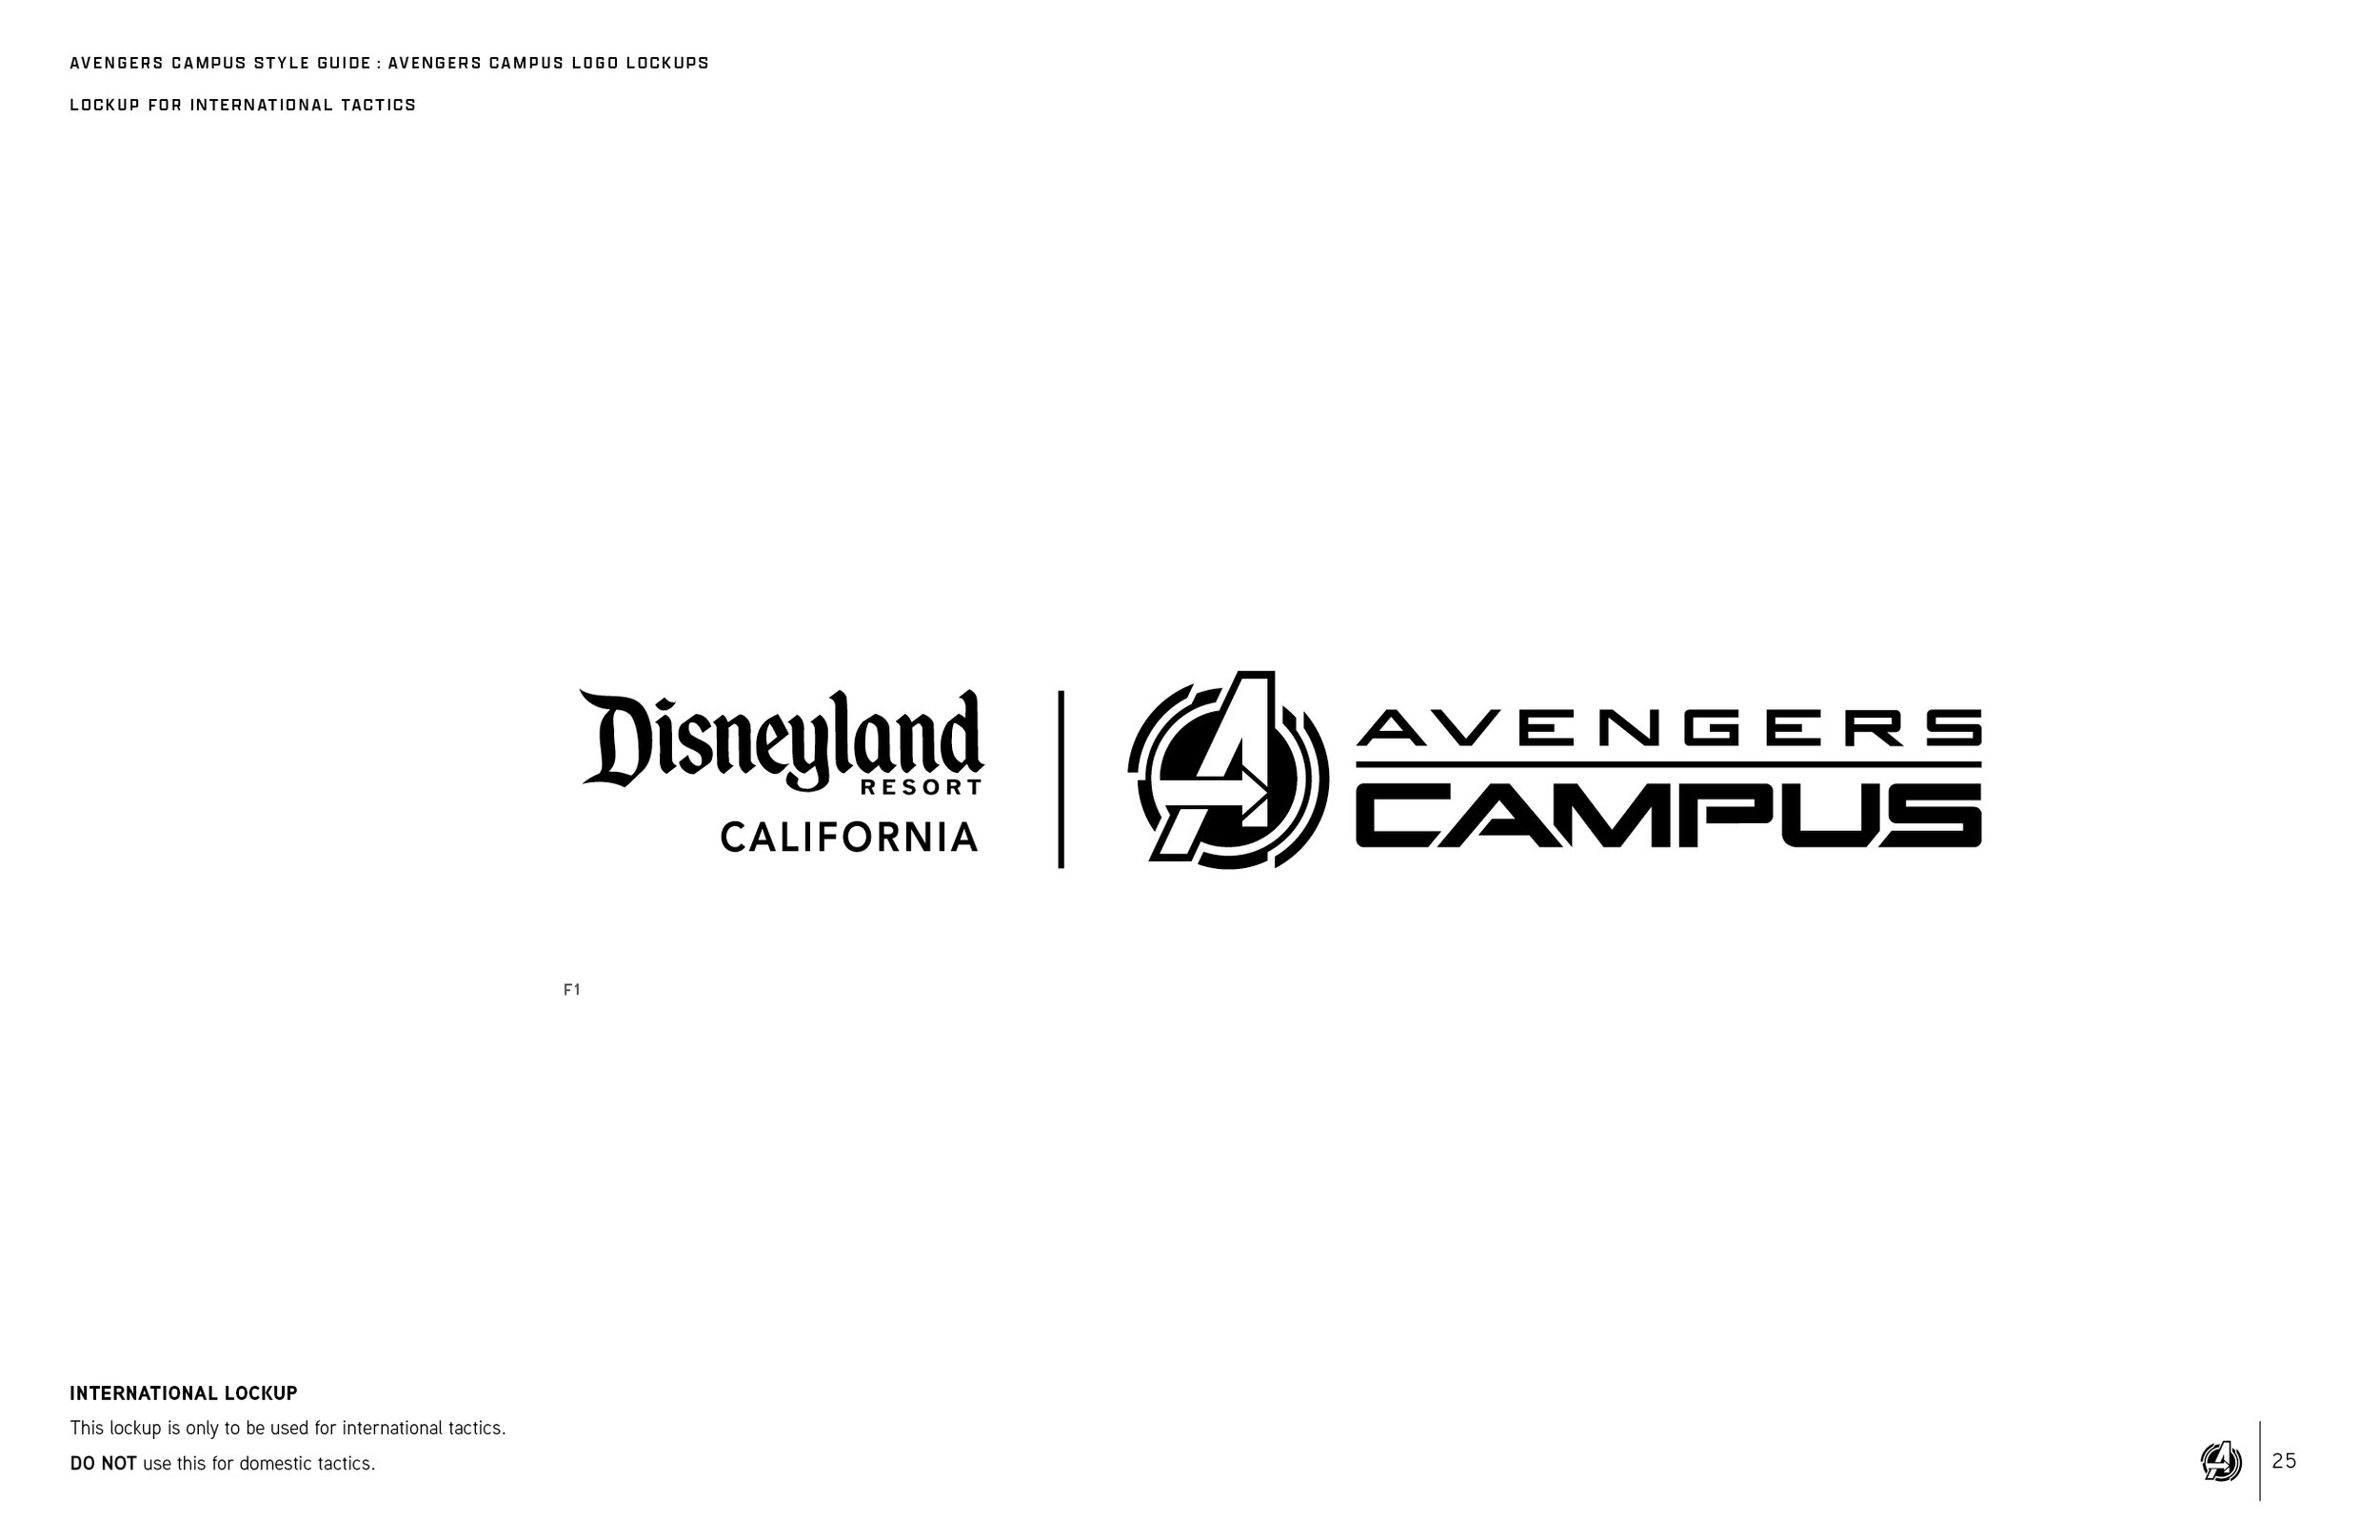 AvengersCampus_StyleGuide_Website_25.jpg